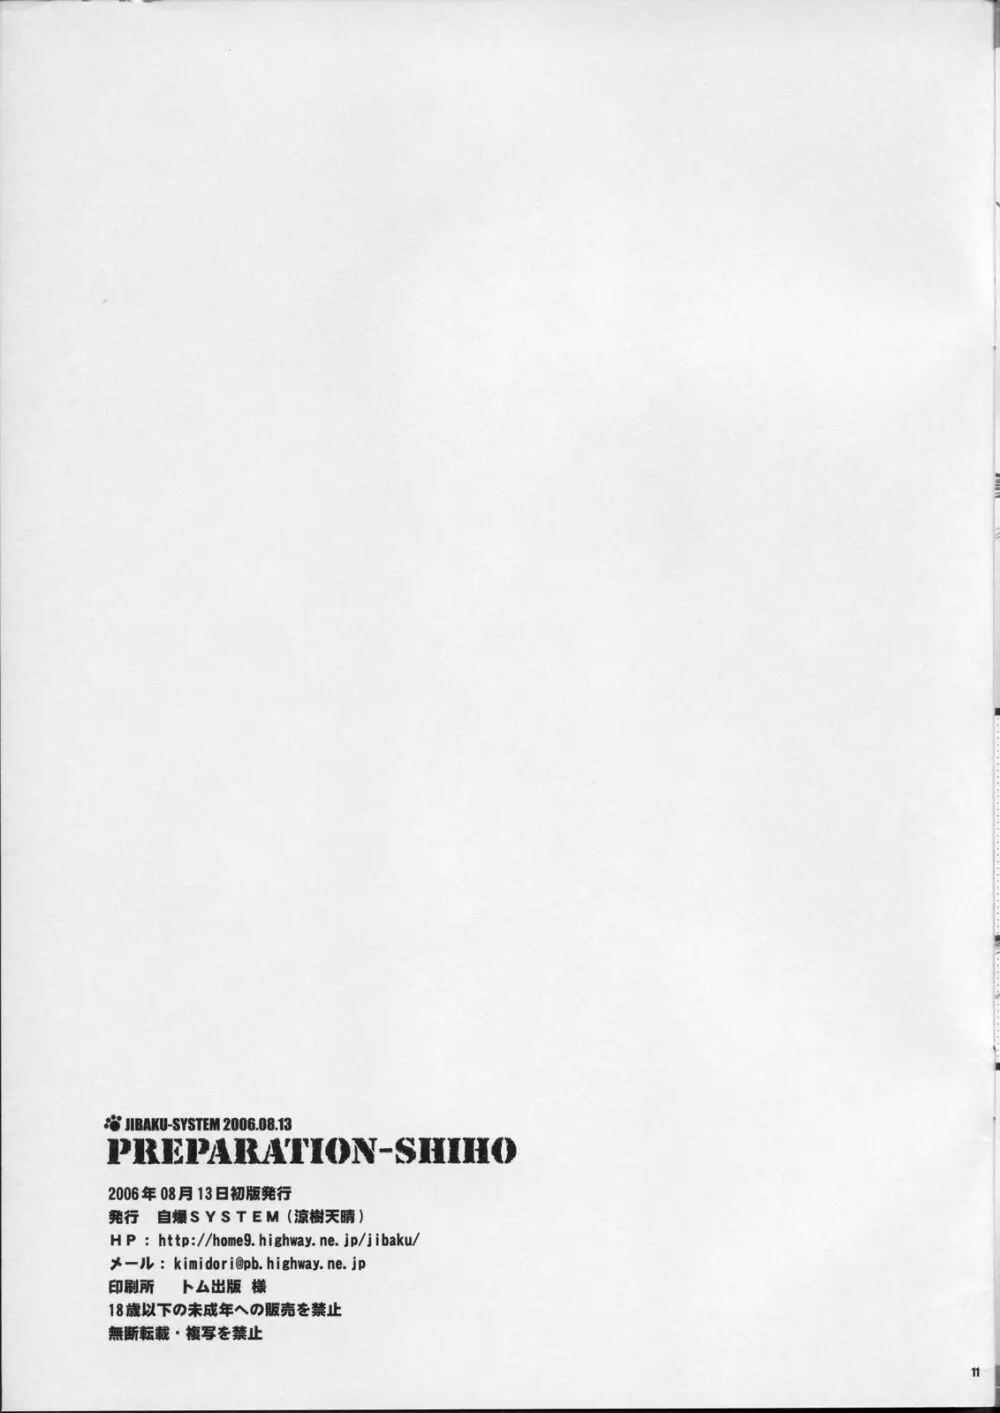 PREPARATION-SHIHO - page10